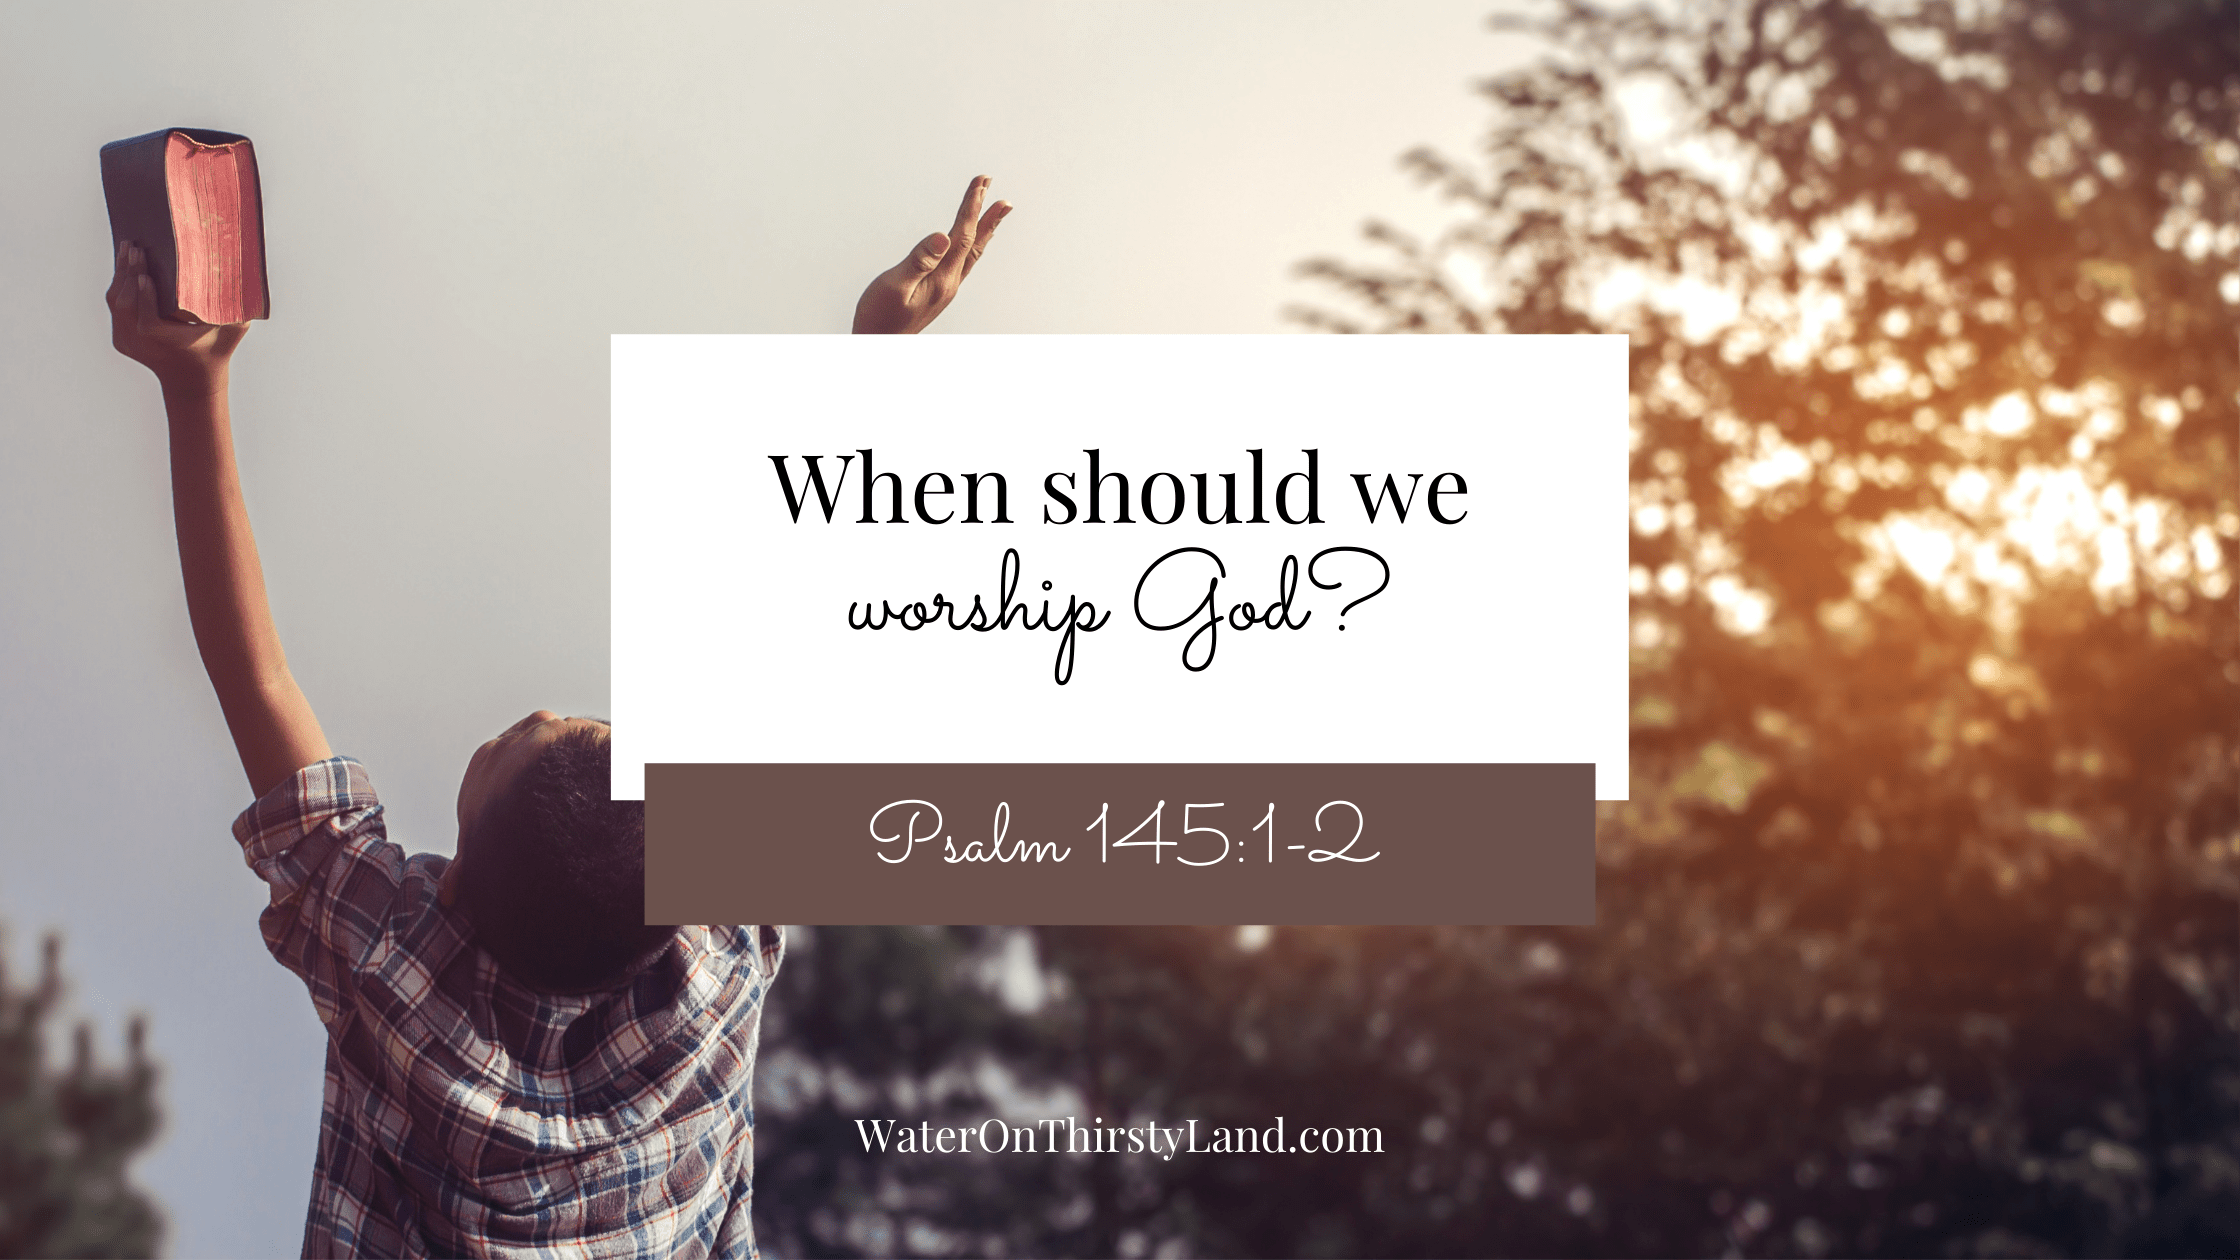 When should we worship God?